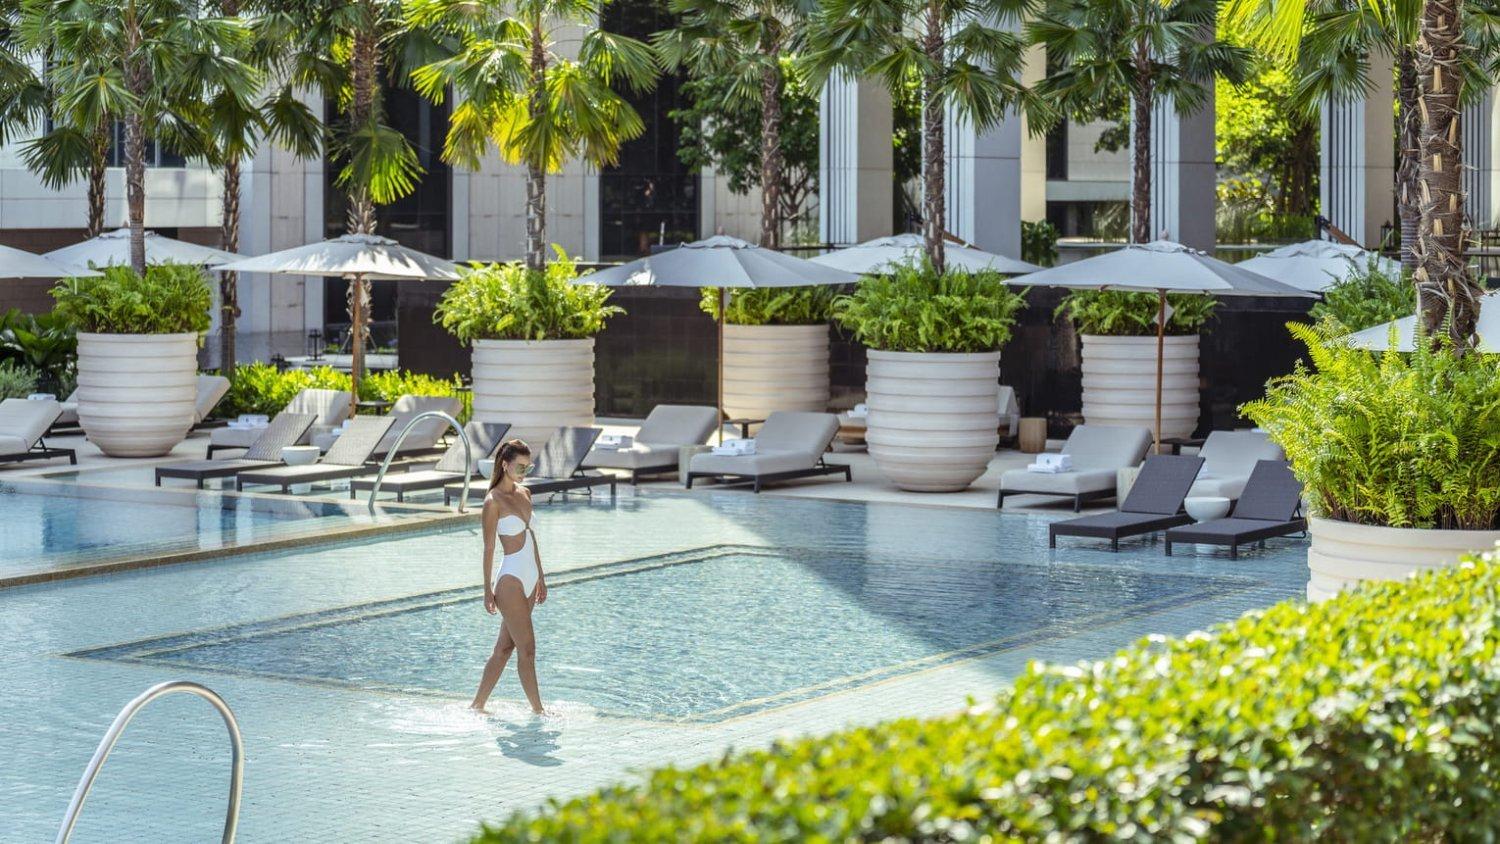 【曼谷】Four Seasons Hotel Bangkok at Chao Phraya River2晚自由行套票送早餐及單程機場接送